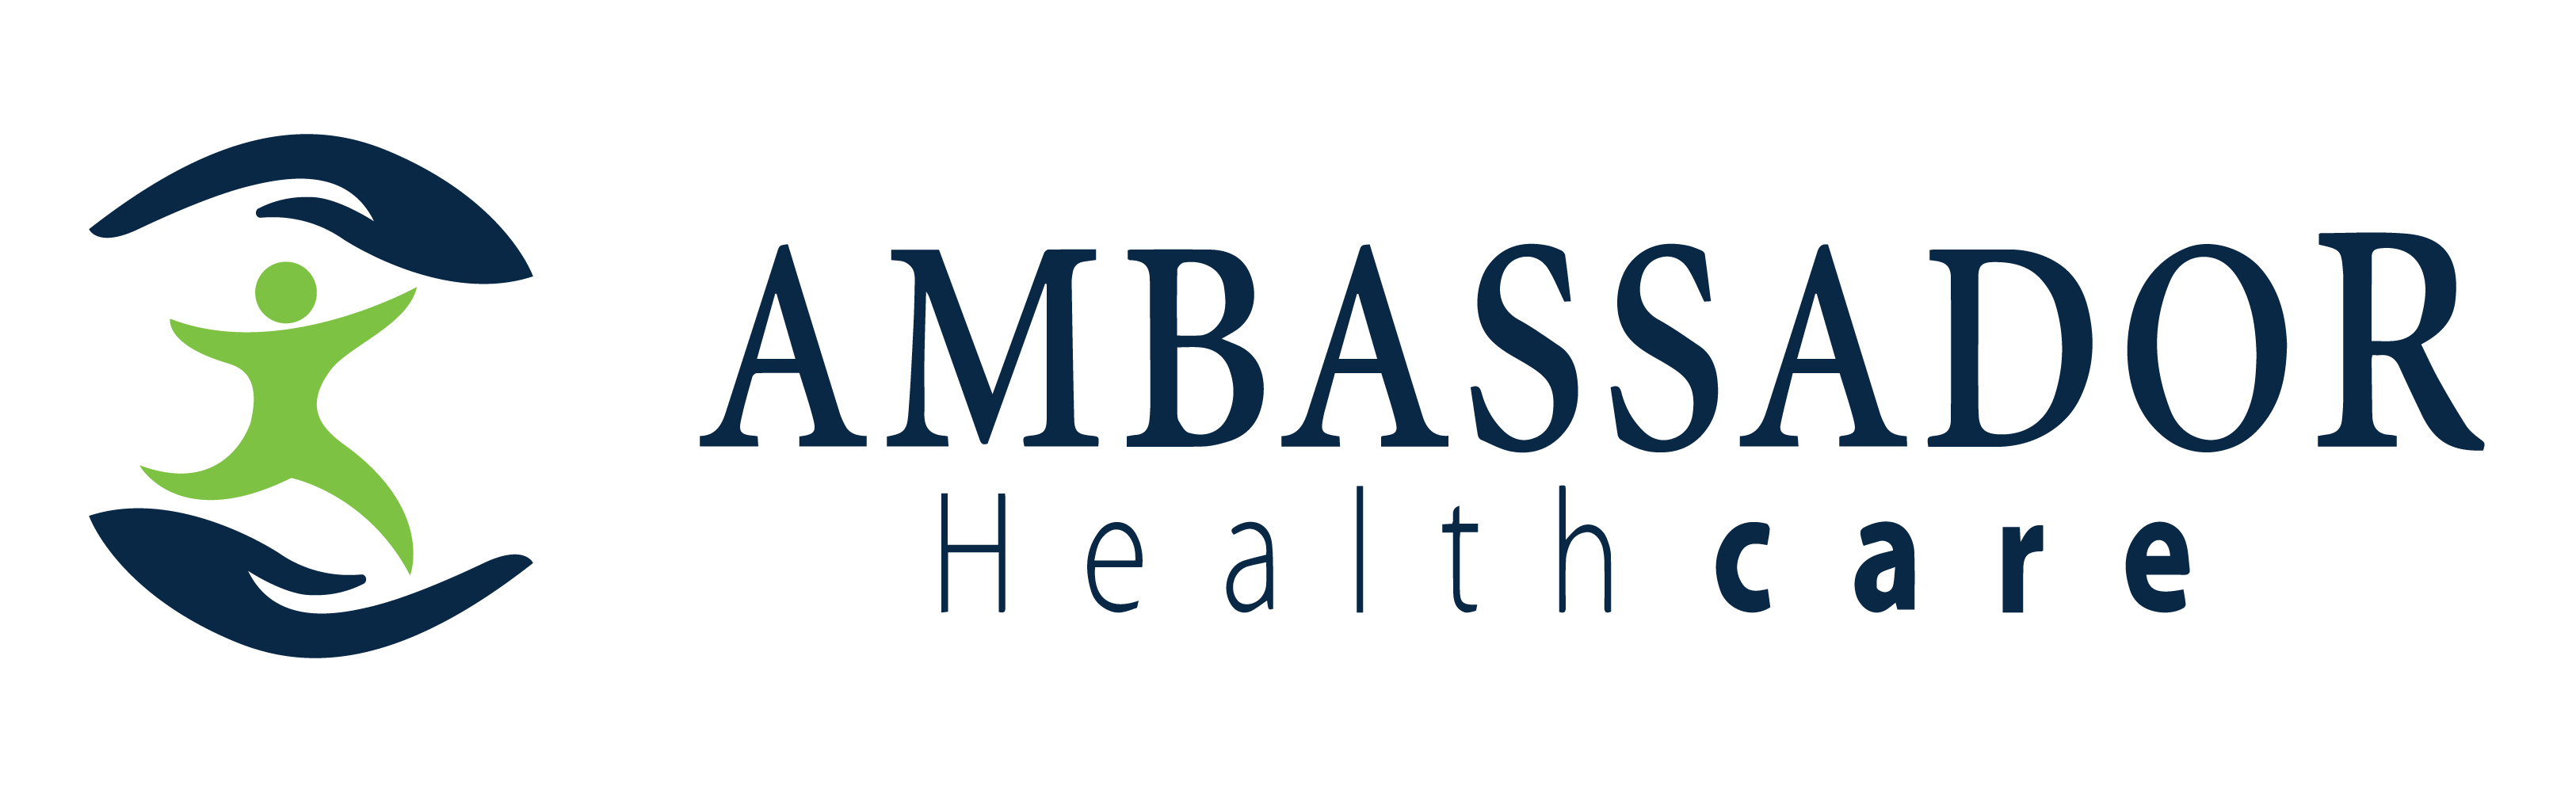 Ambassador Healthcare